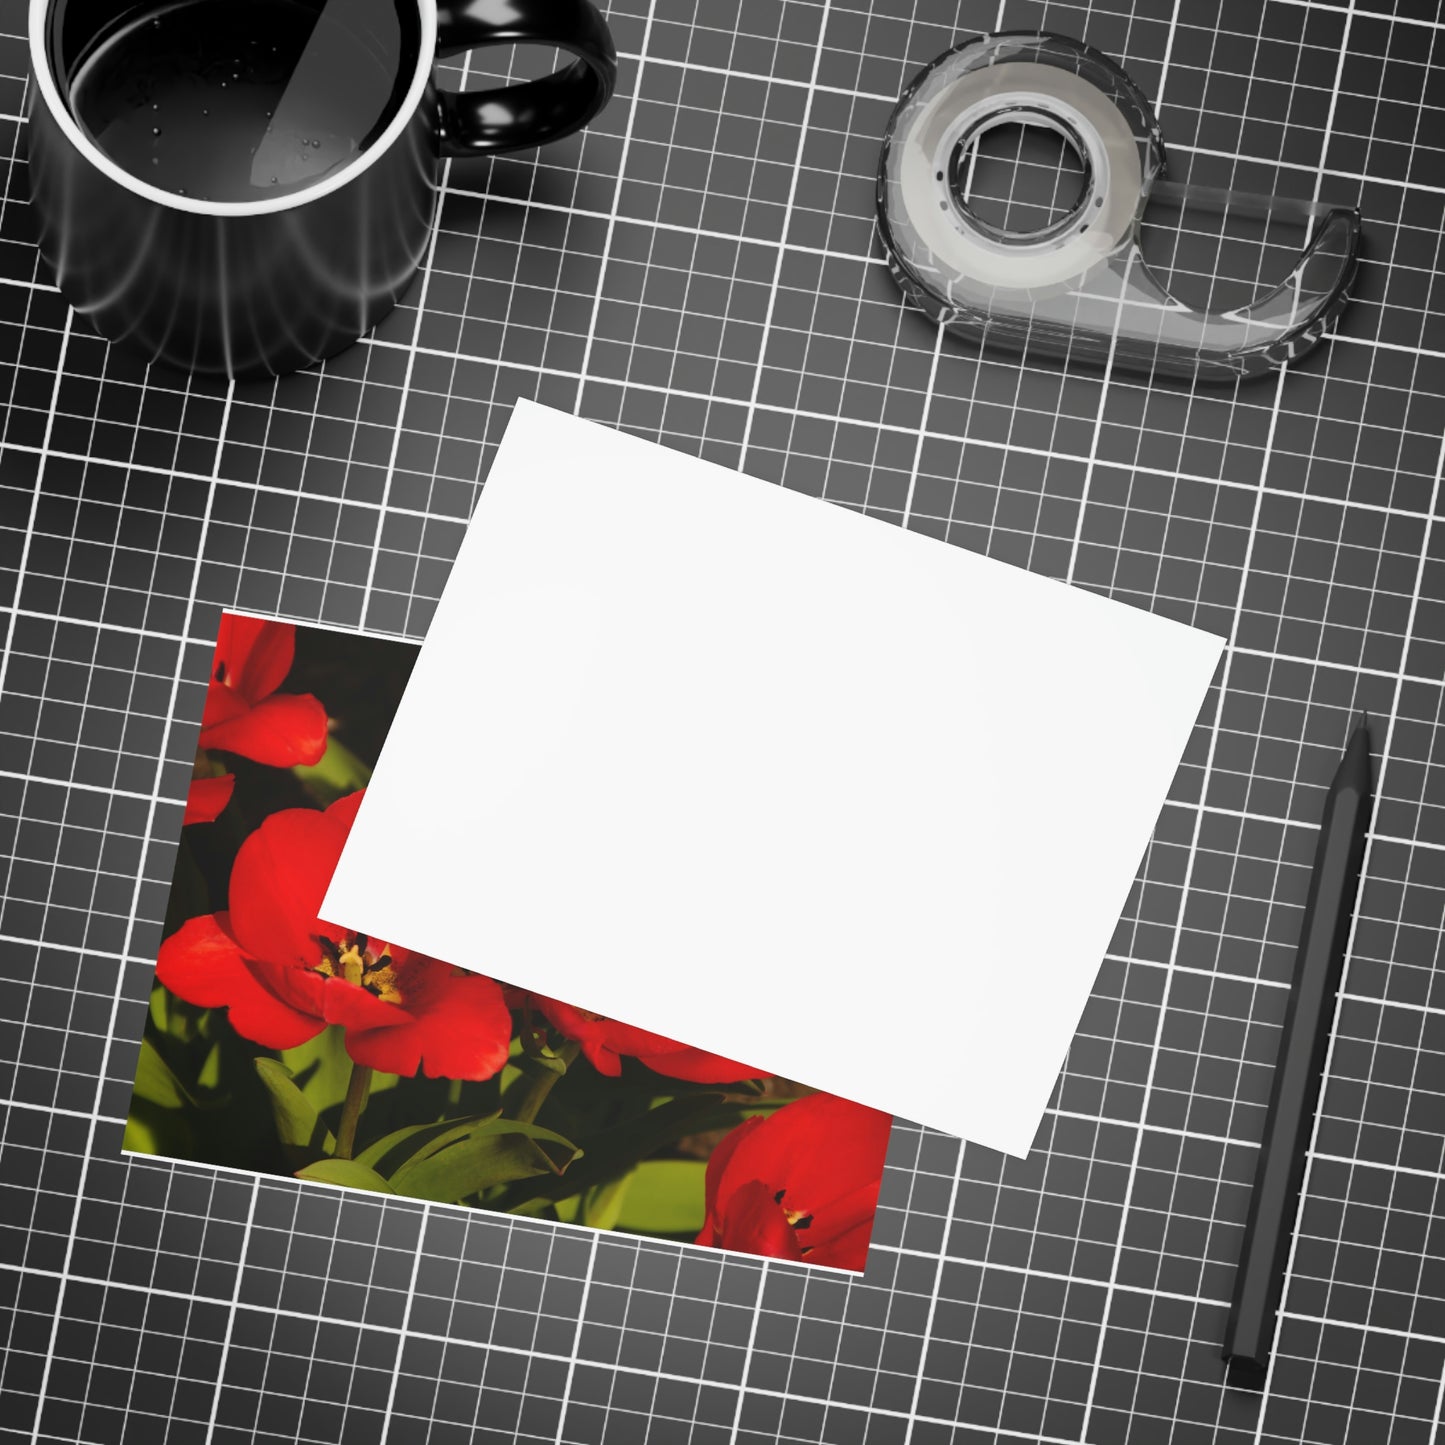 Flowers 05 Greeting Card Bundles (envelopes not included)